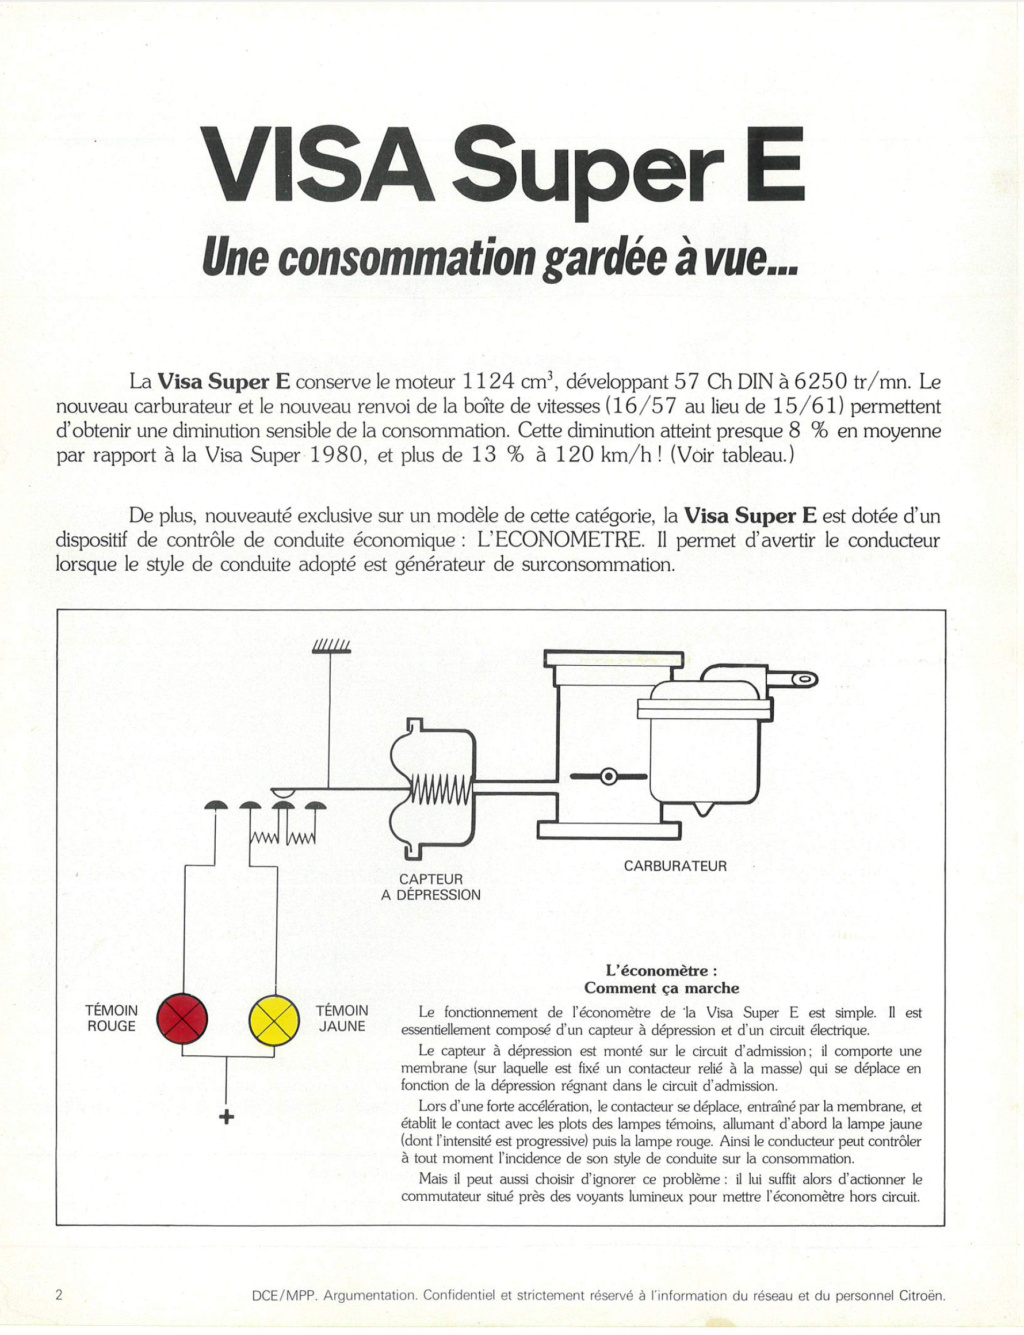 Confidentiel force de vente - 1980 - Visa Super E Visa-s11